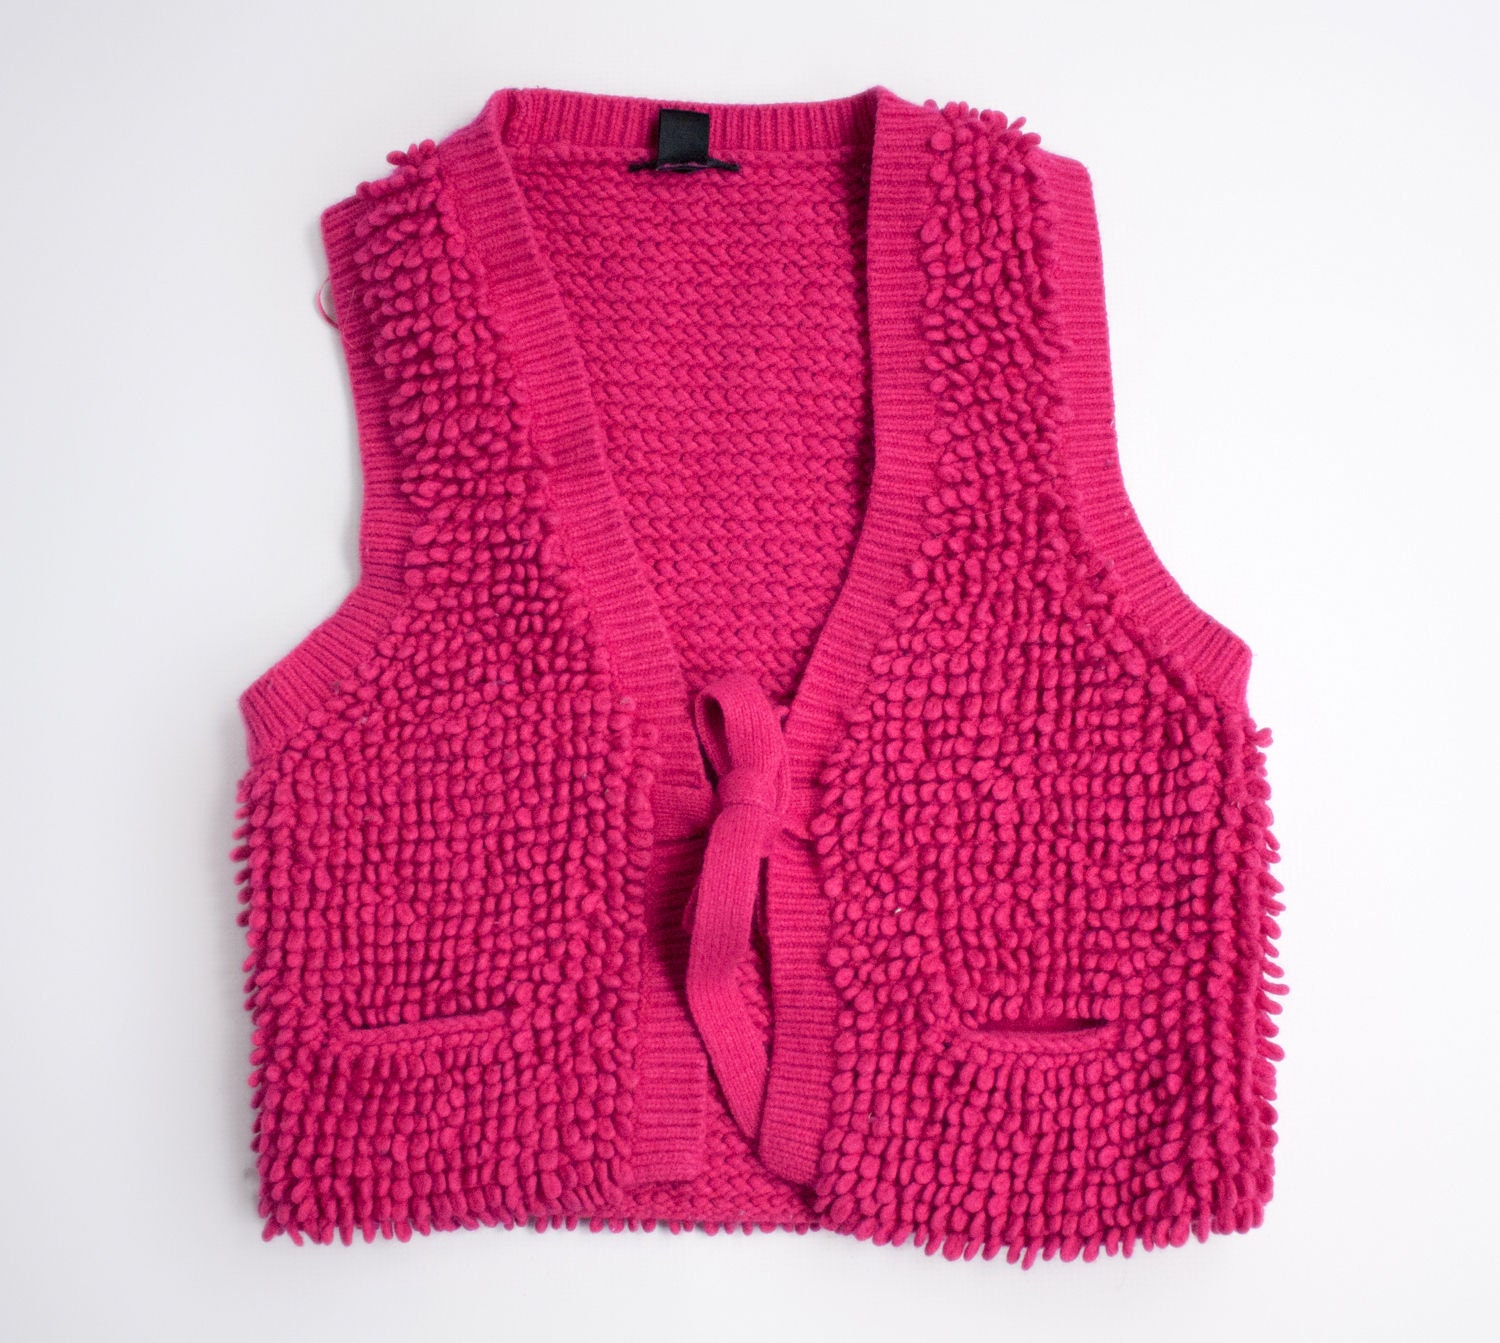 Sonia Rykiel For H&m Textured Wool Blend Vest Waistcoat, M